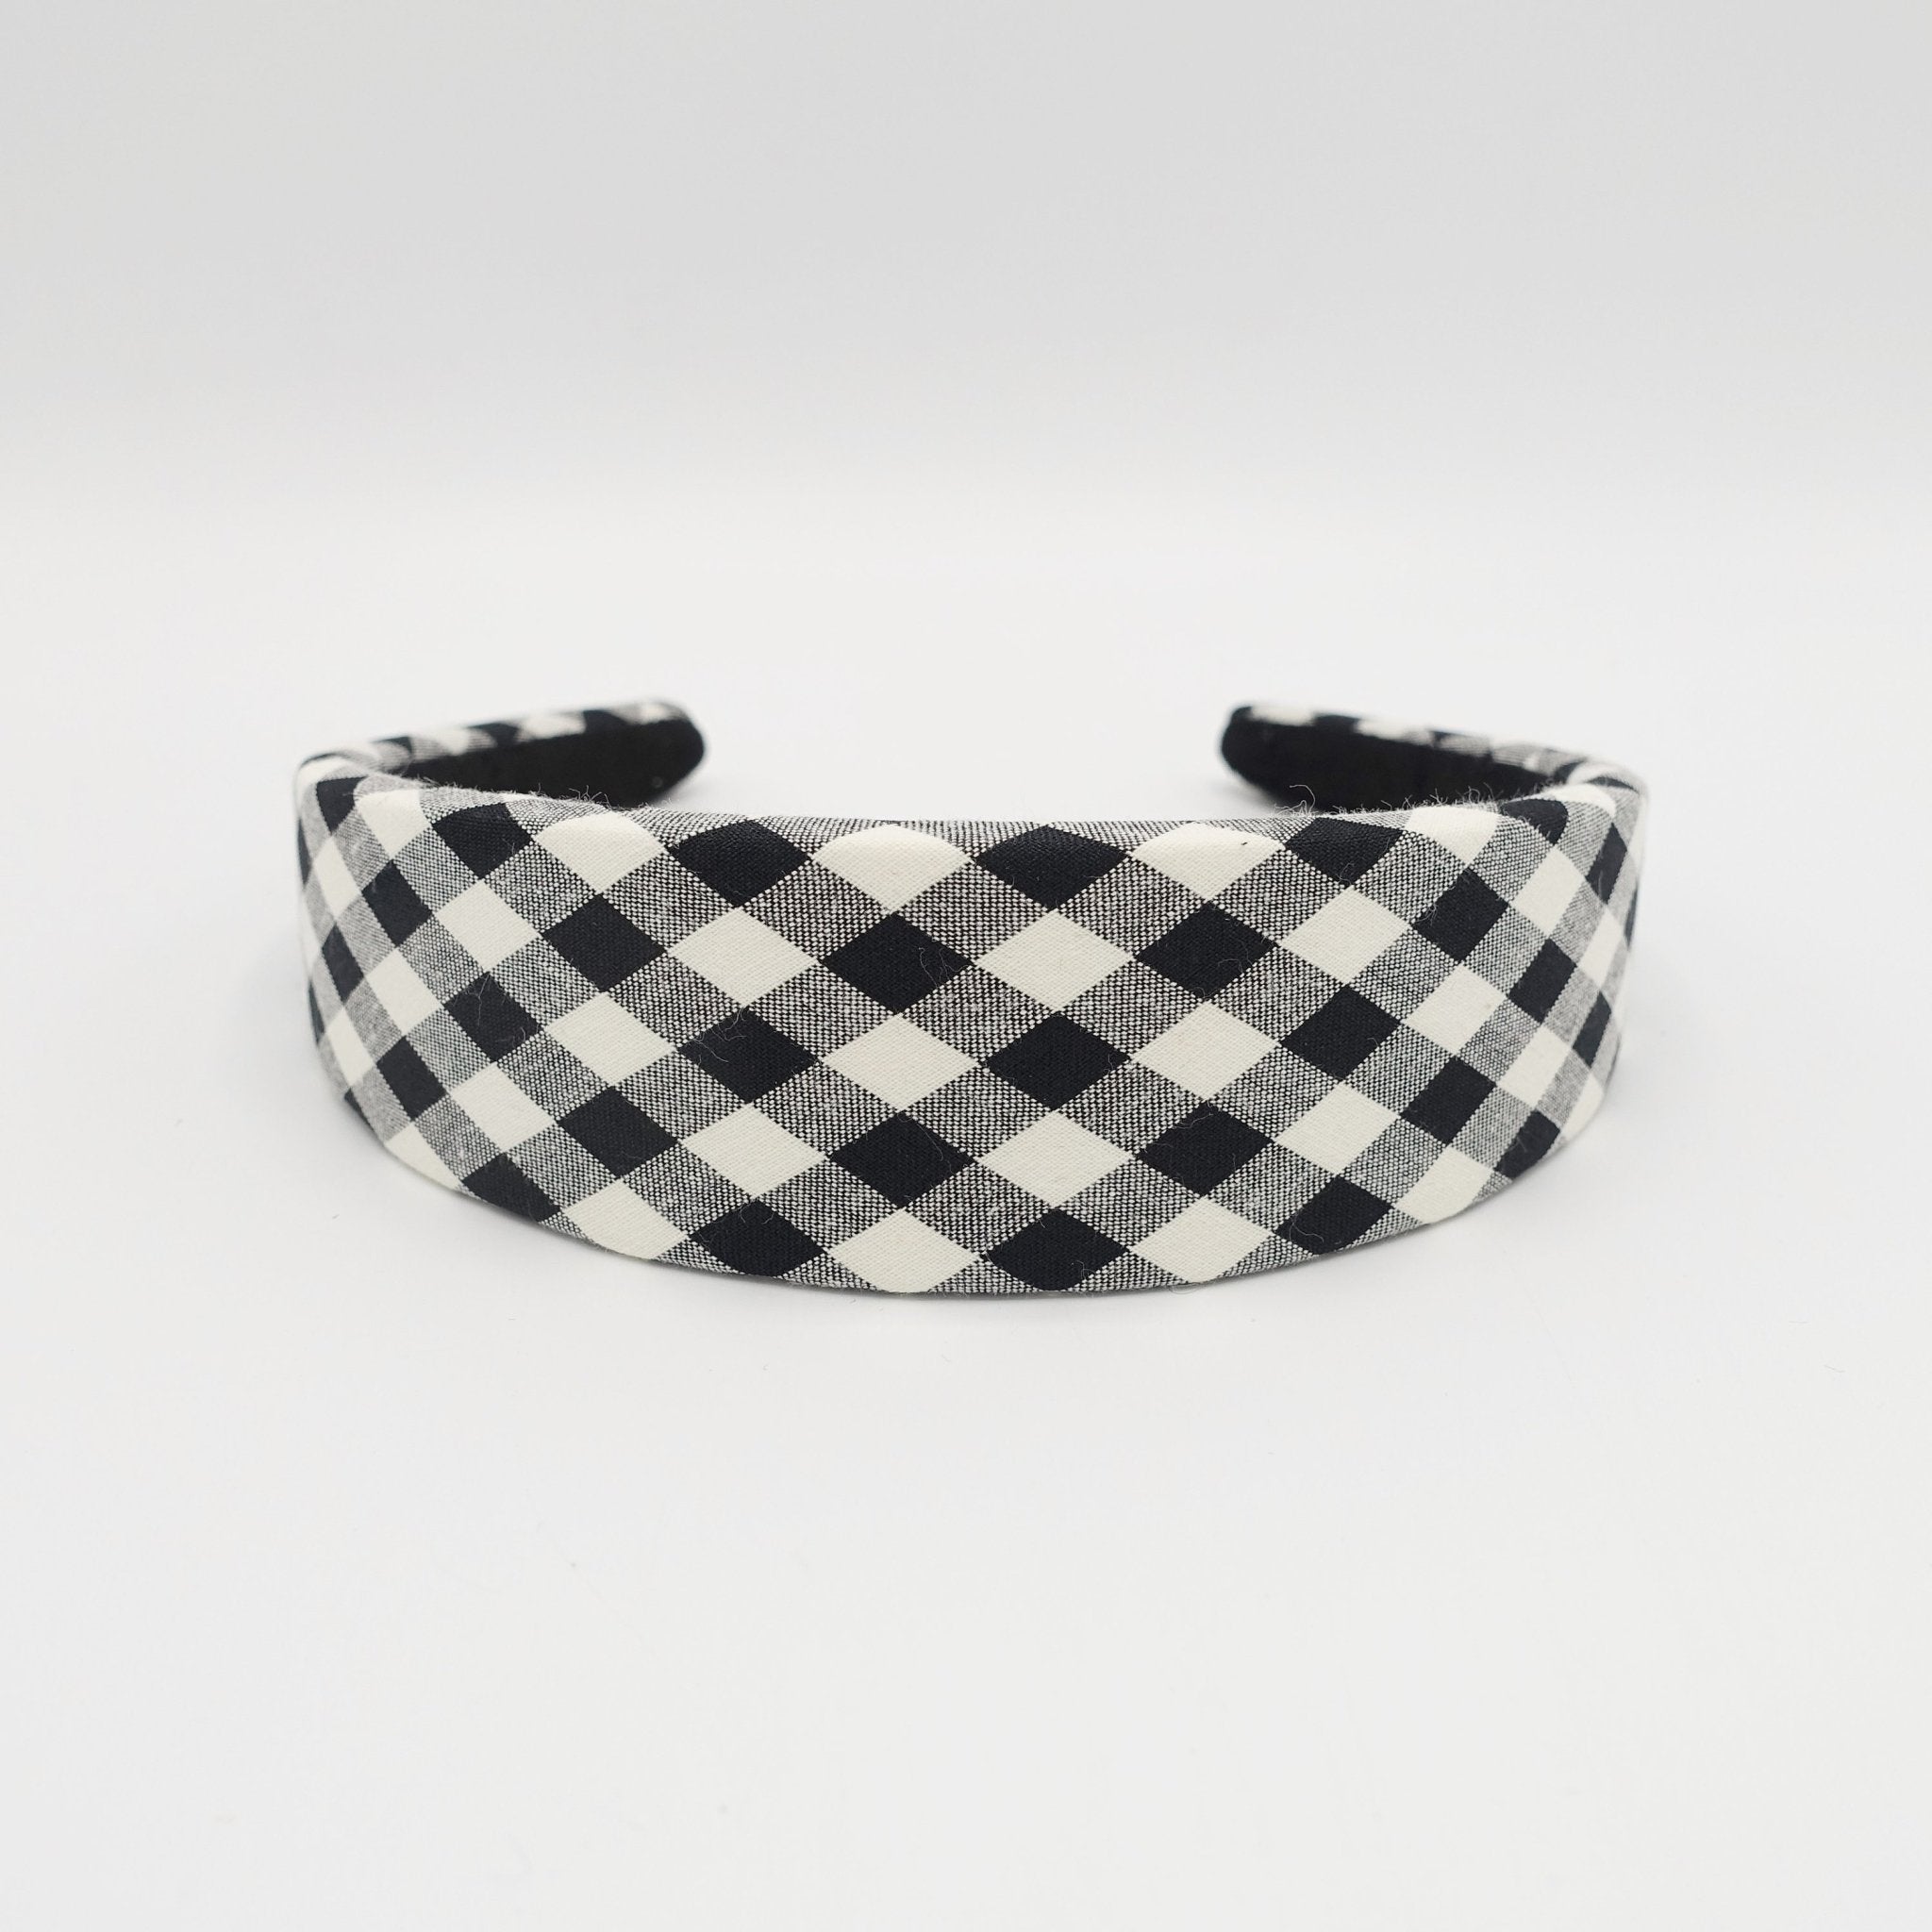 VeryShine Headband gingham check padded headband casual hairband for women